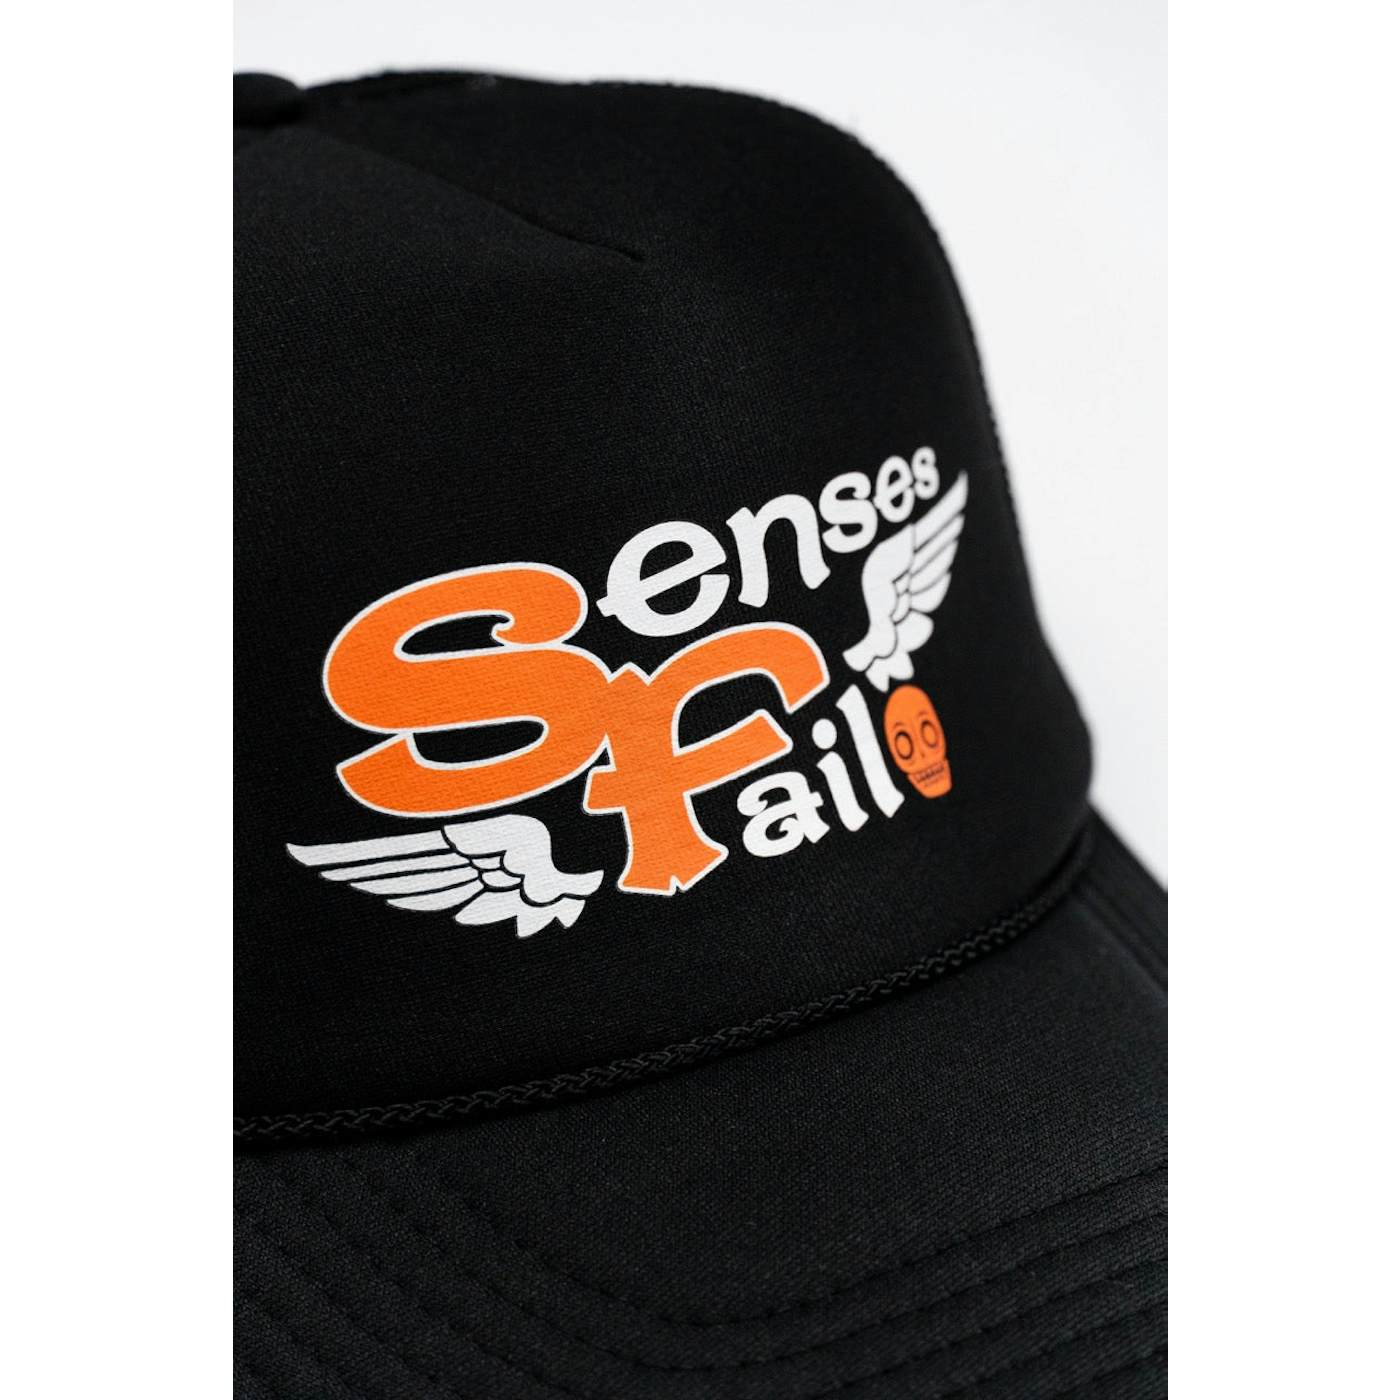 Senses Fail Wings Black Trucker Hat